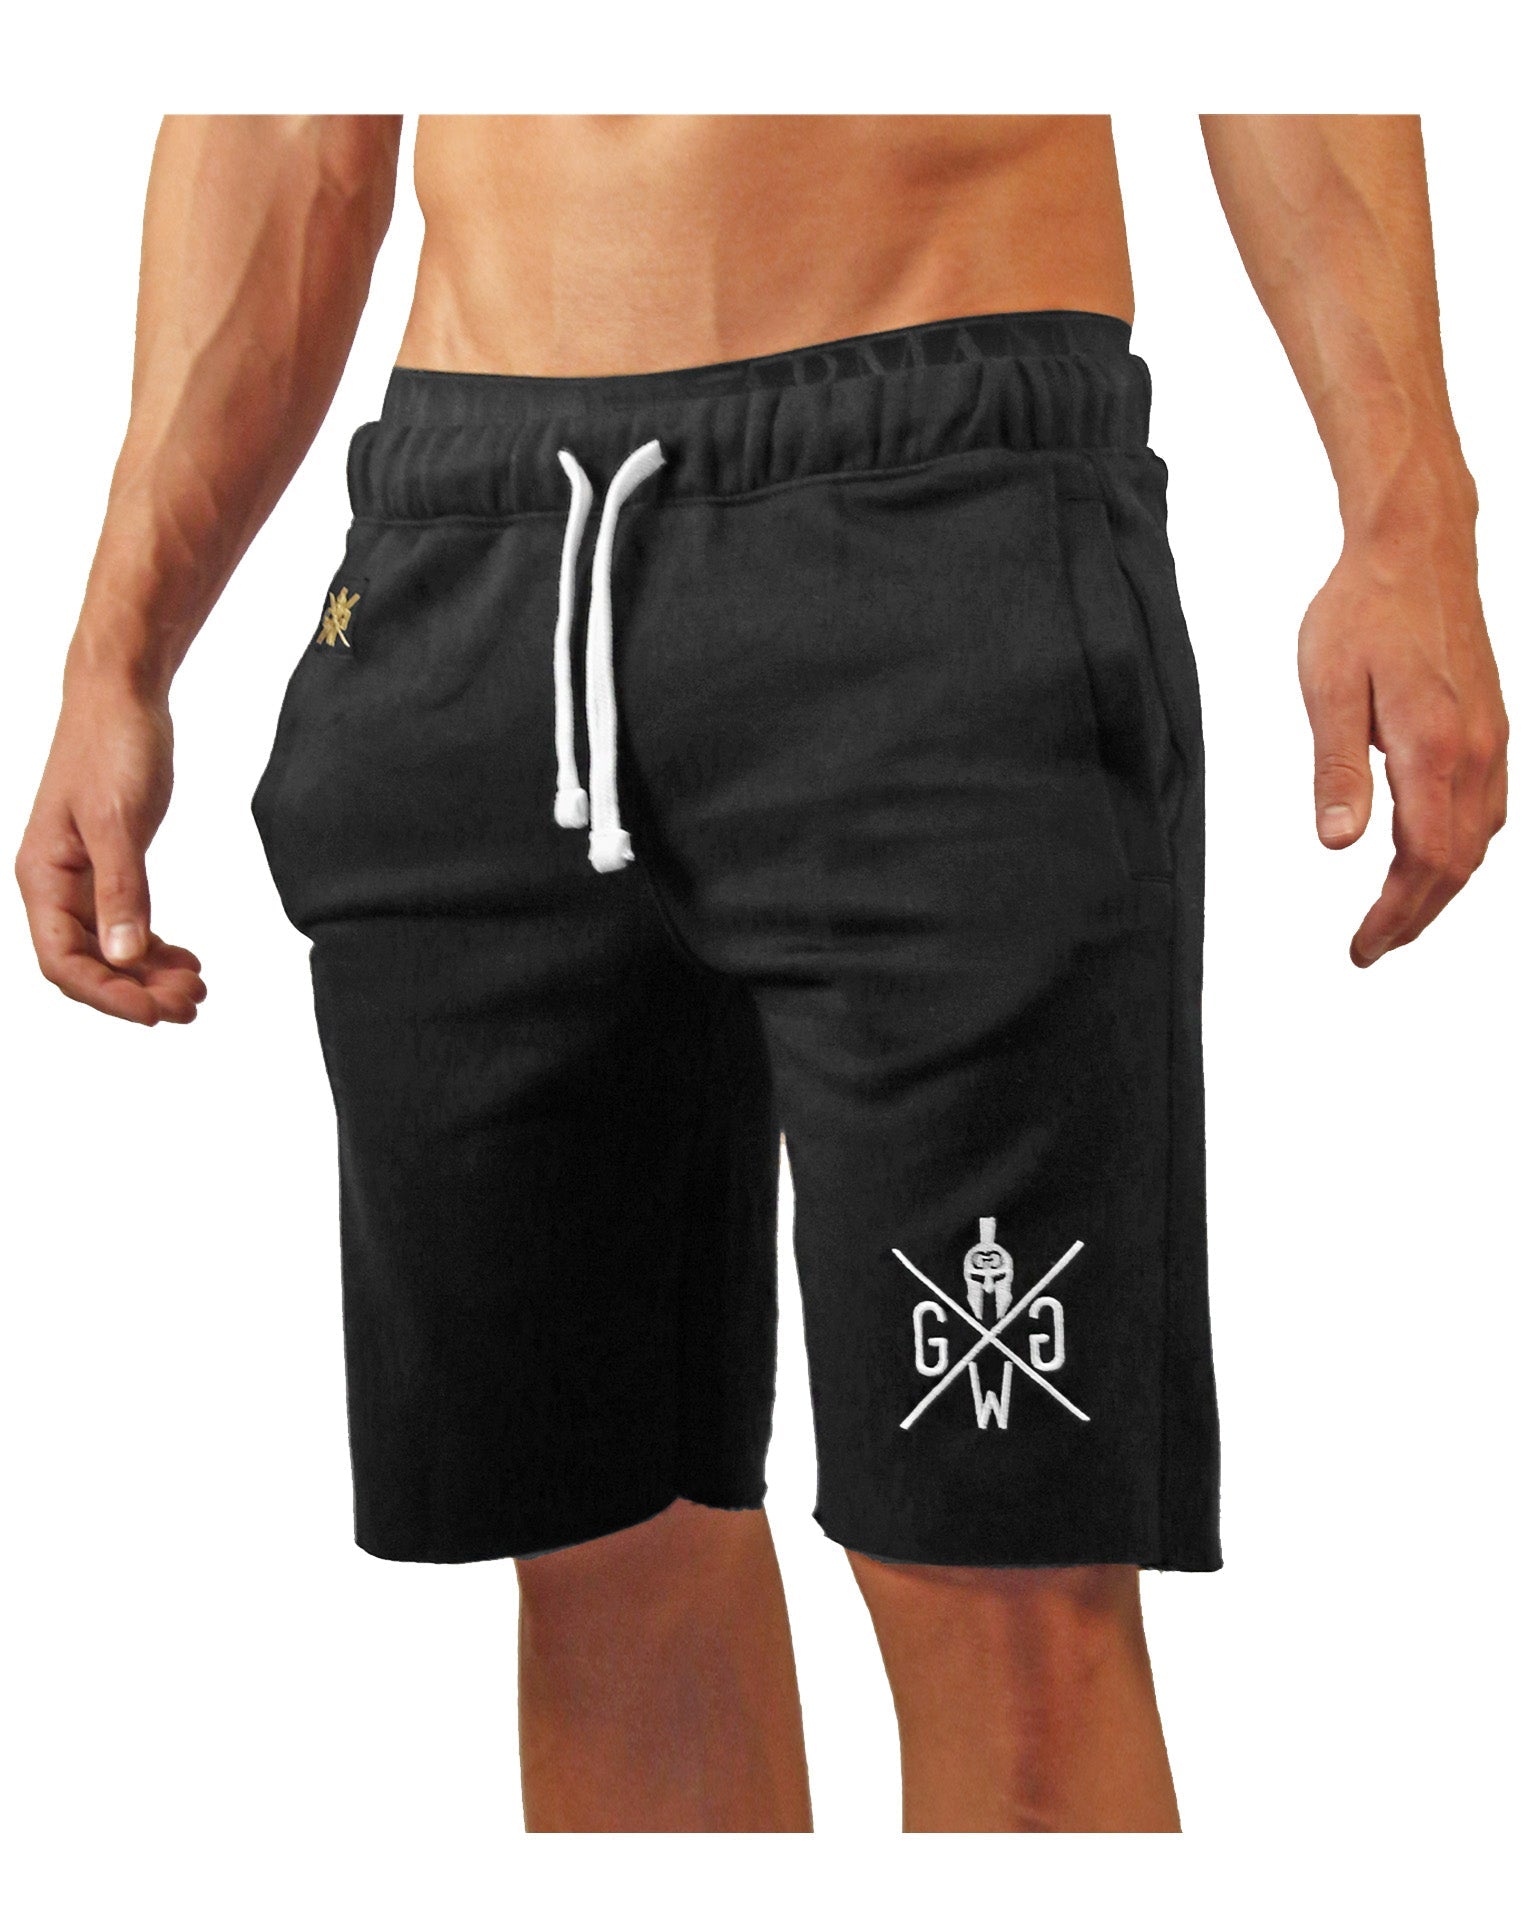 Buy black men's fitness shorts. – Gym Generation®